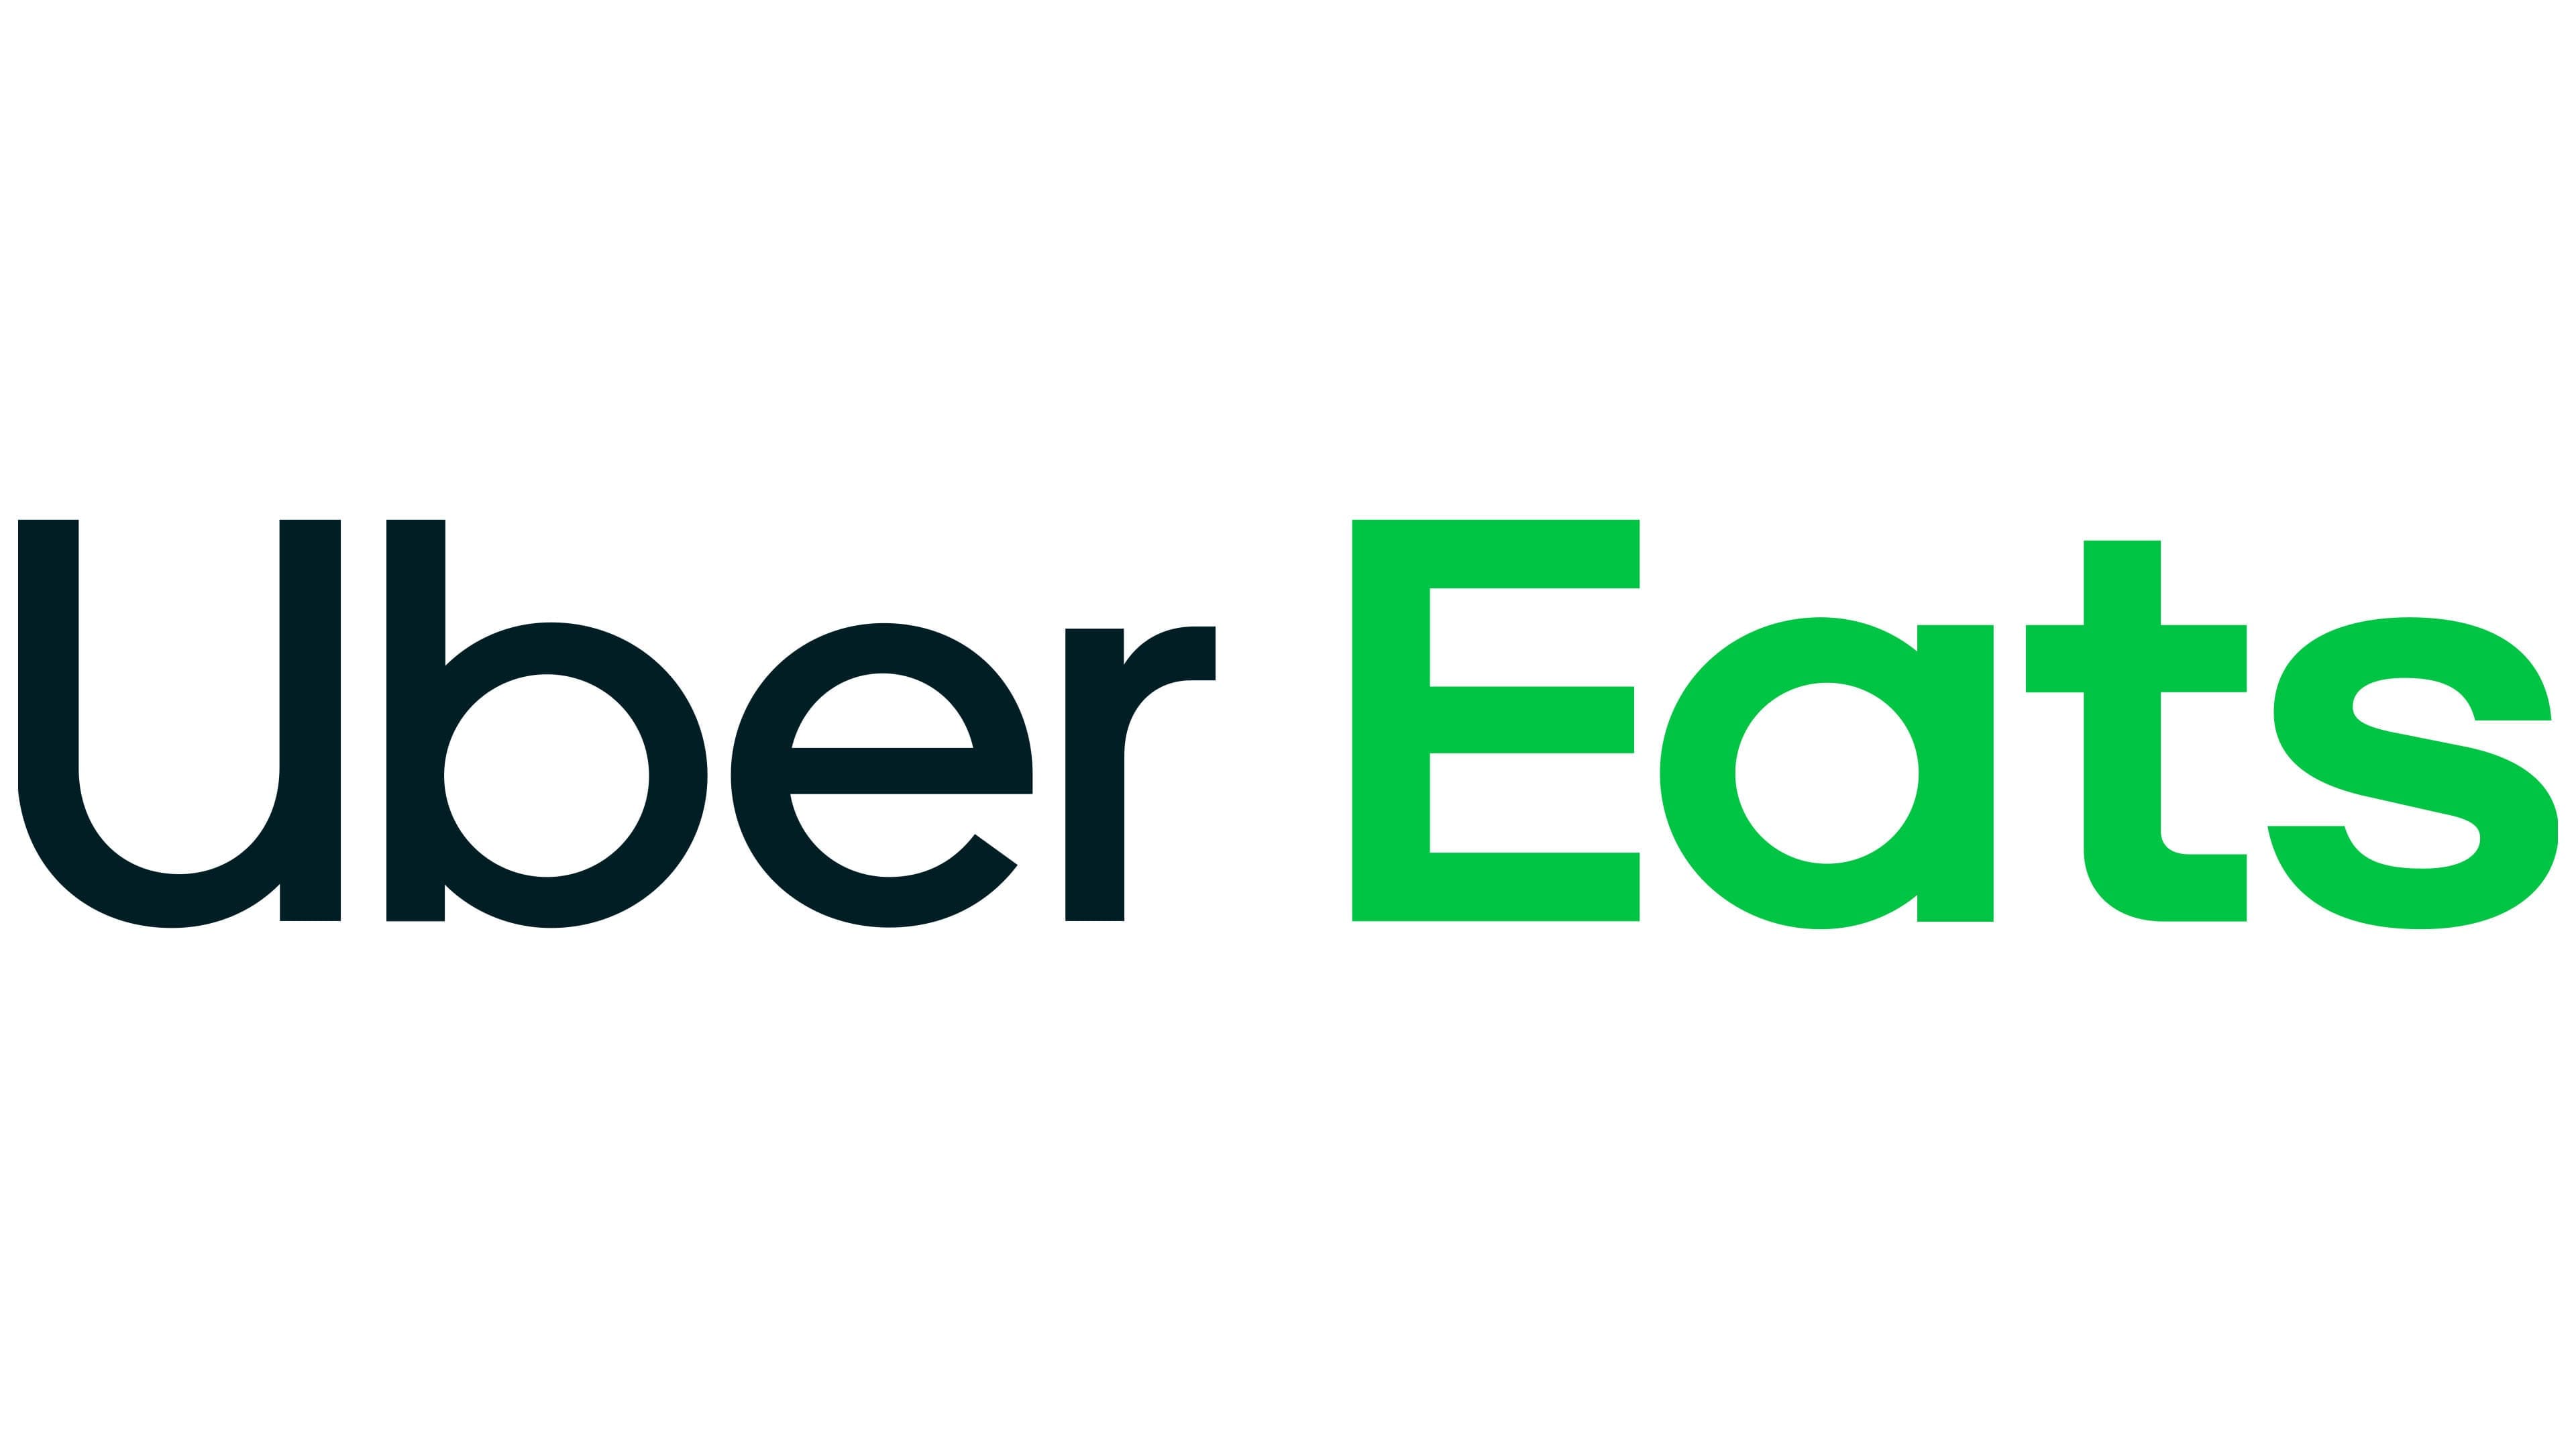 uber-eats-logo-symbol-meaning-history-png-brand